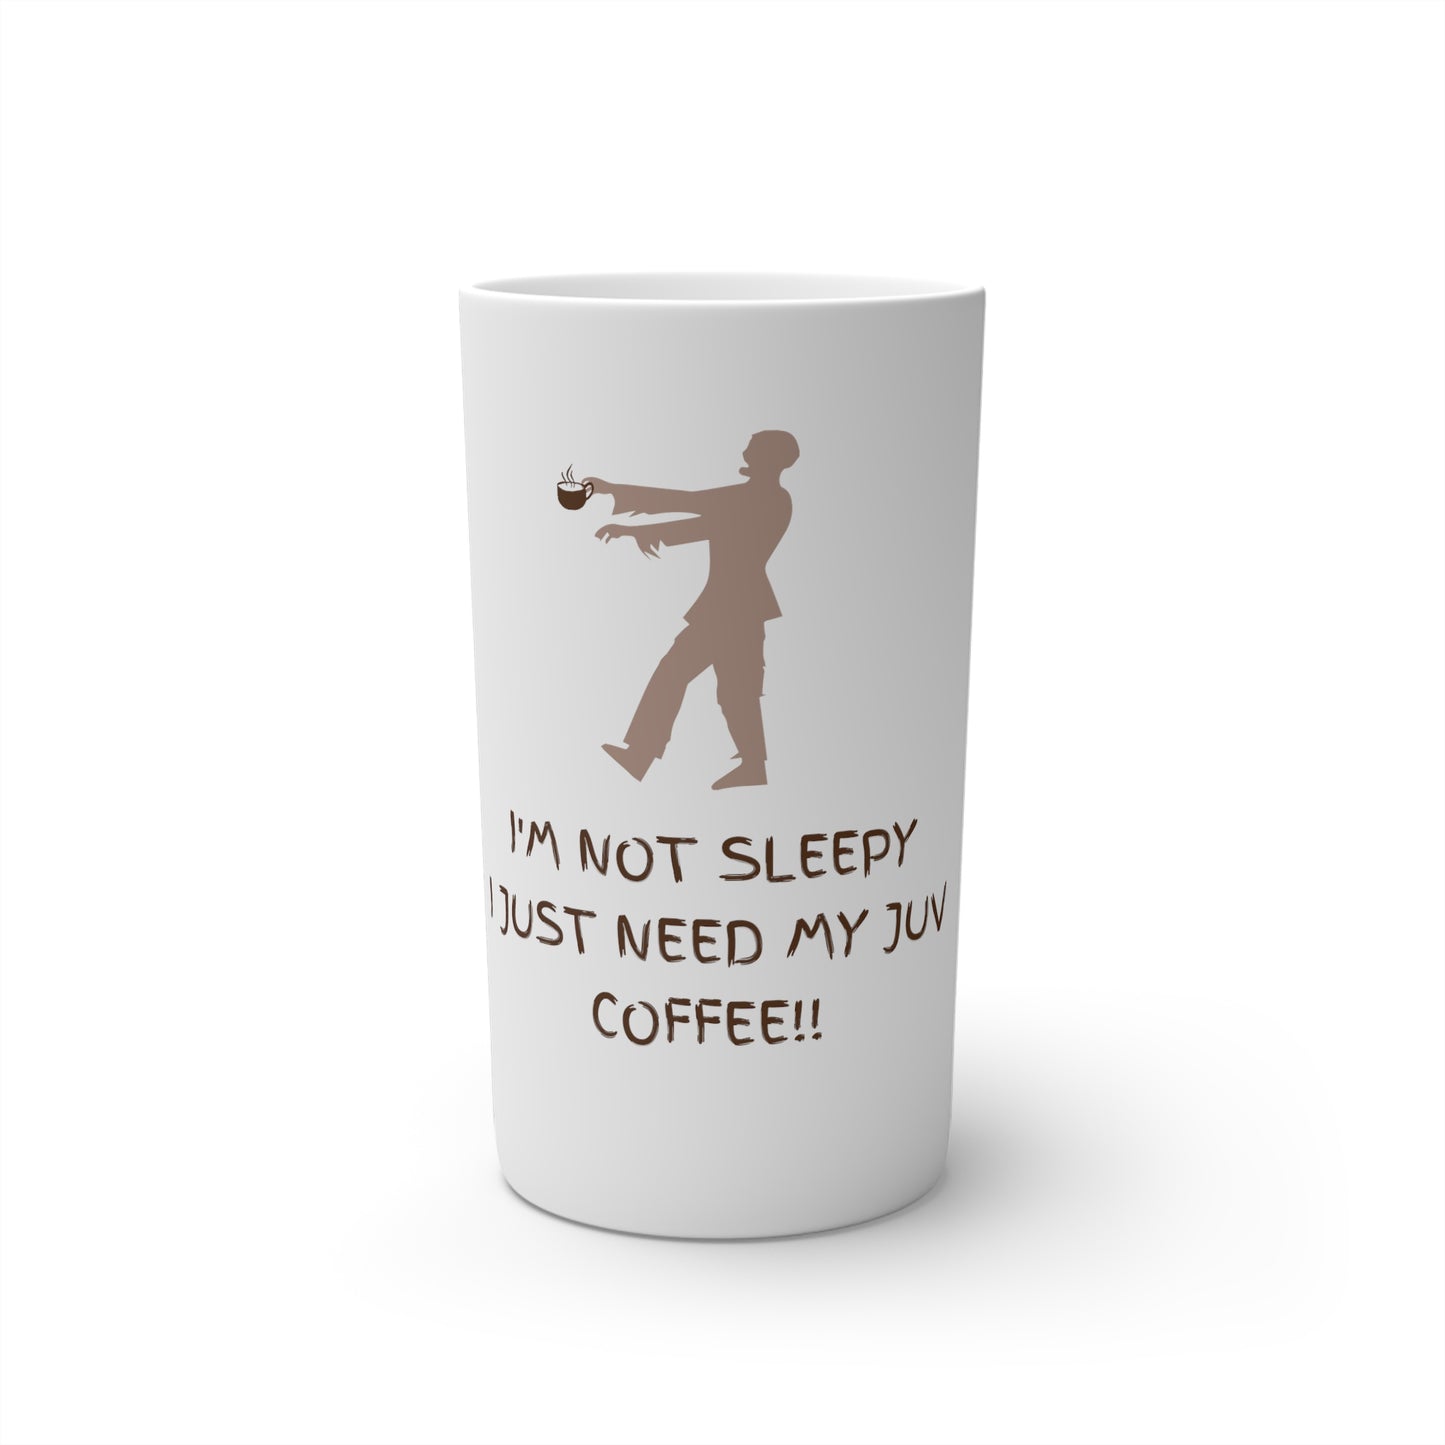 Conical Coffee Mugs (3oz, 8oz, 12oz)